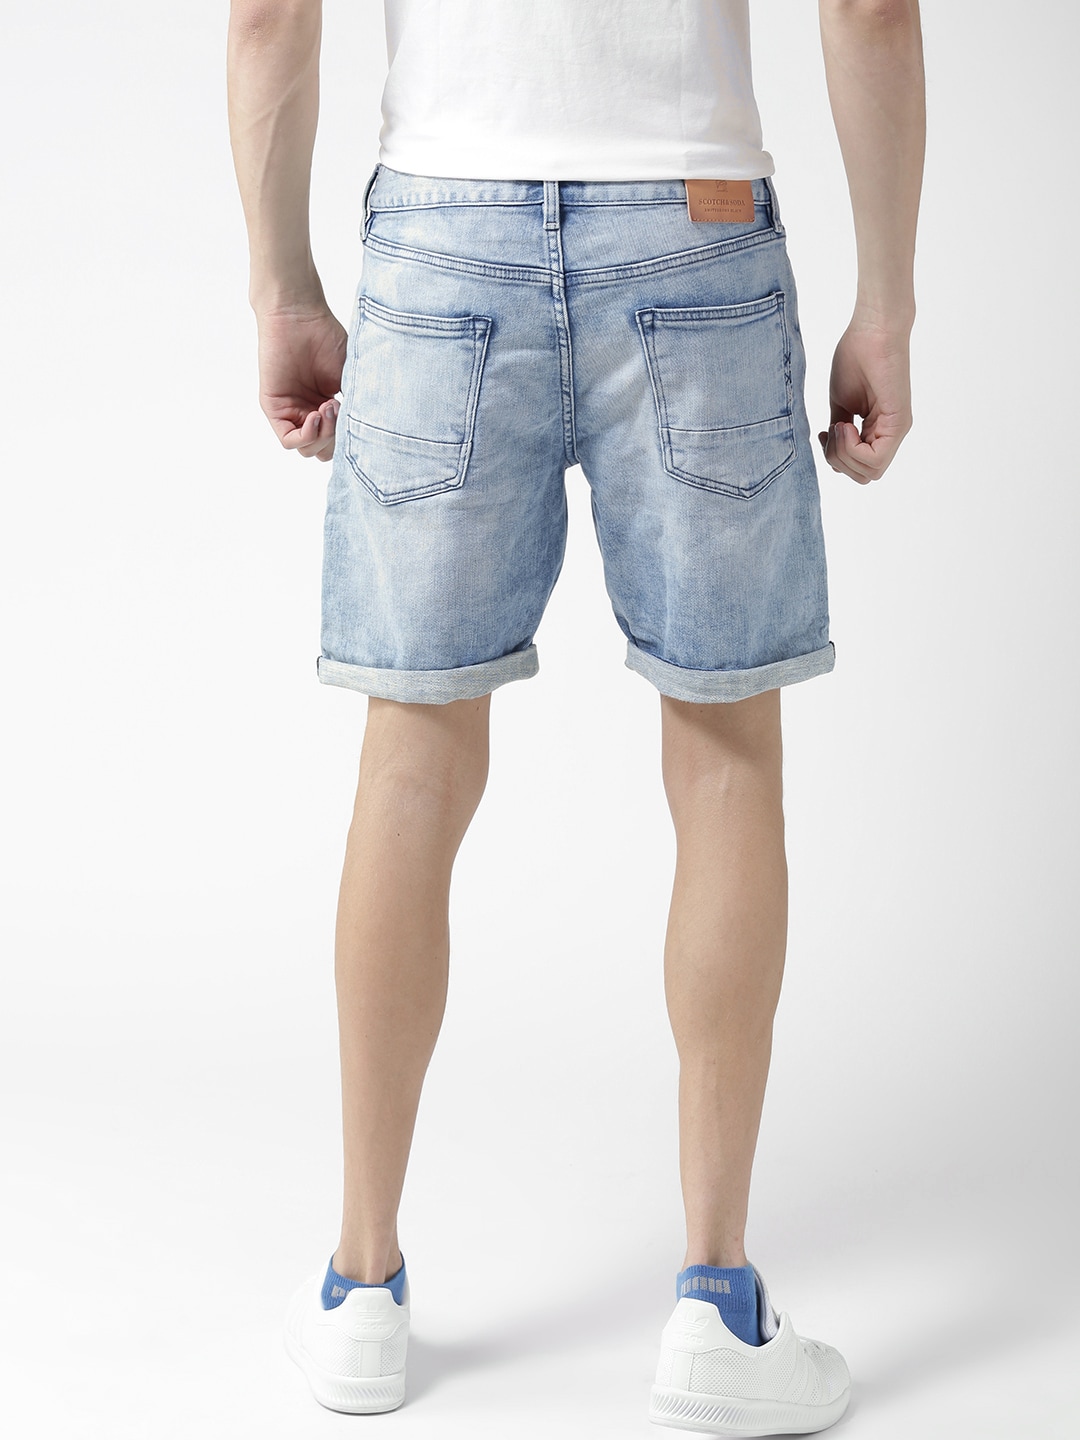 Denim Shorts - Buy Denim Shorts online in India